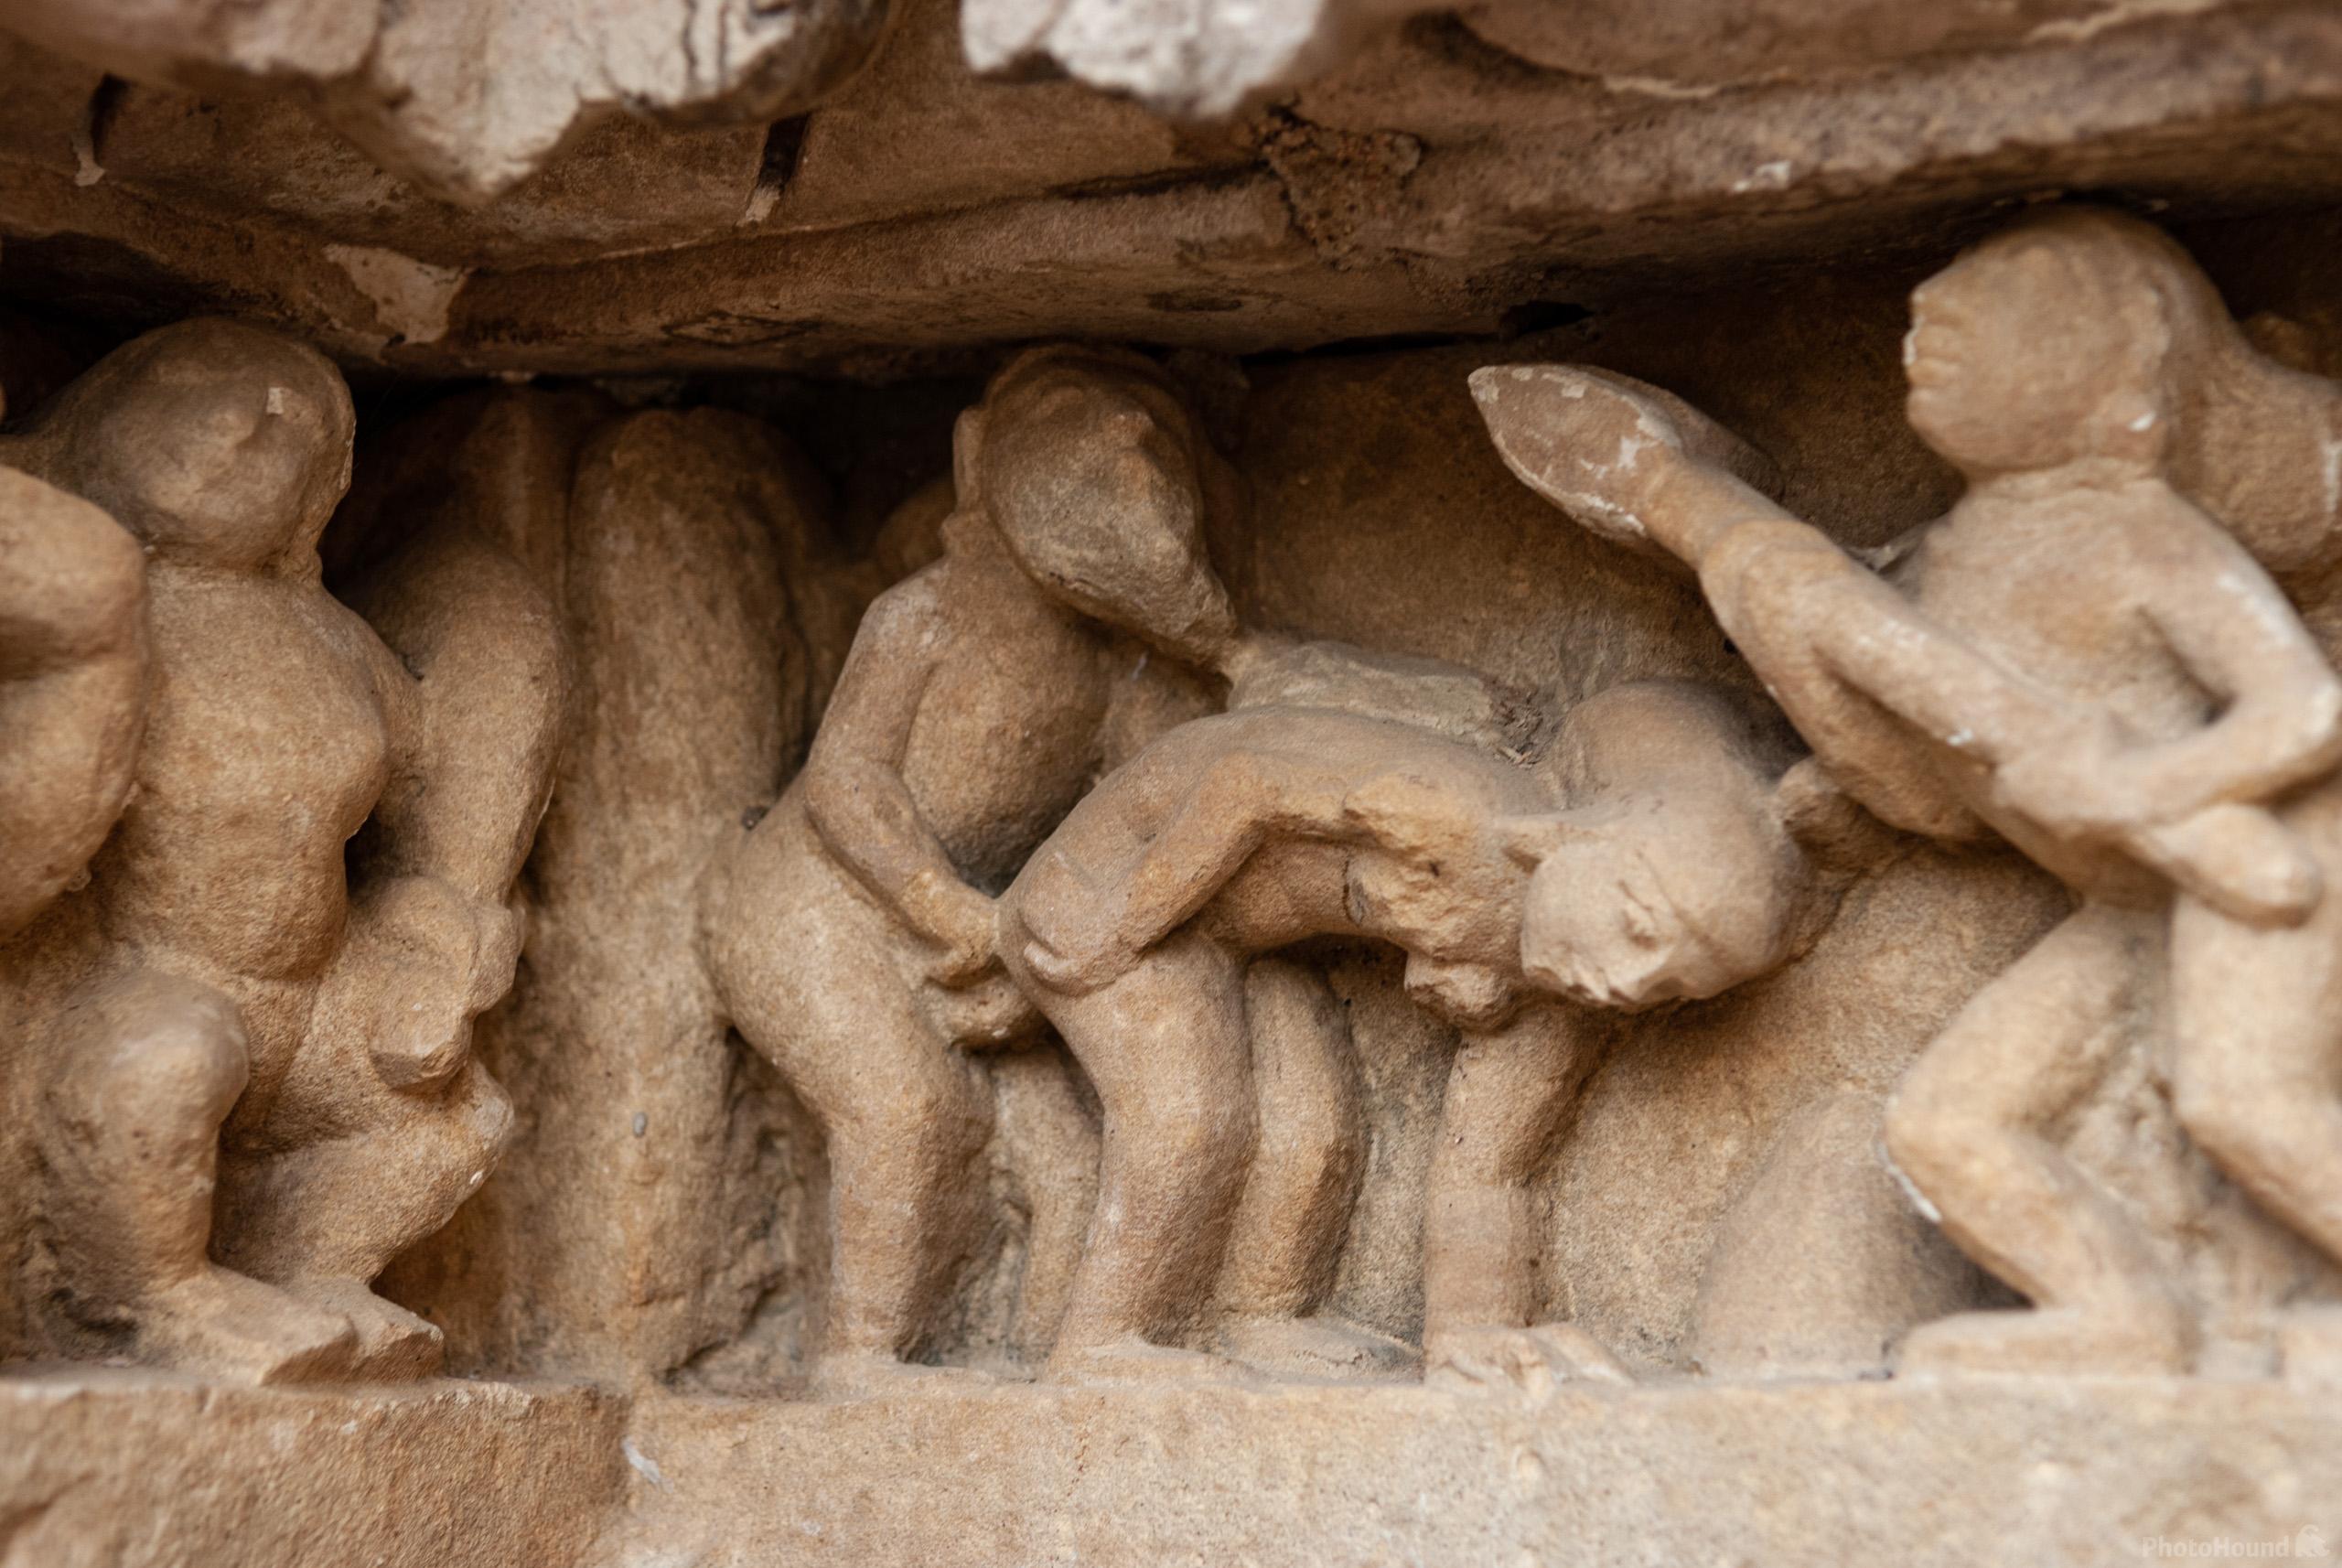 Image of Kamasutra temples at Khajuraho by Luka Esenko